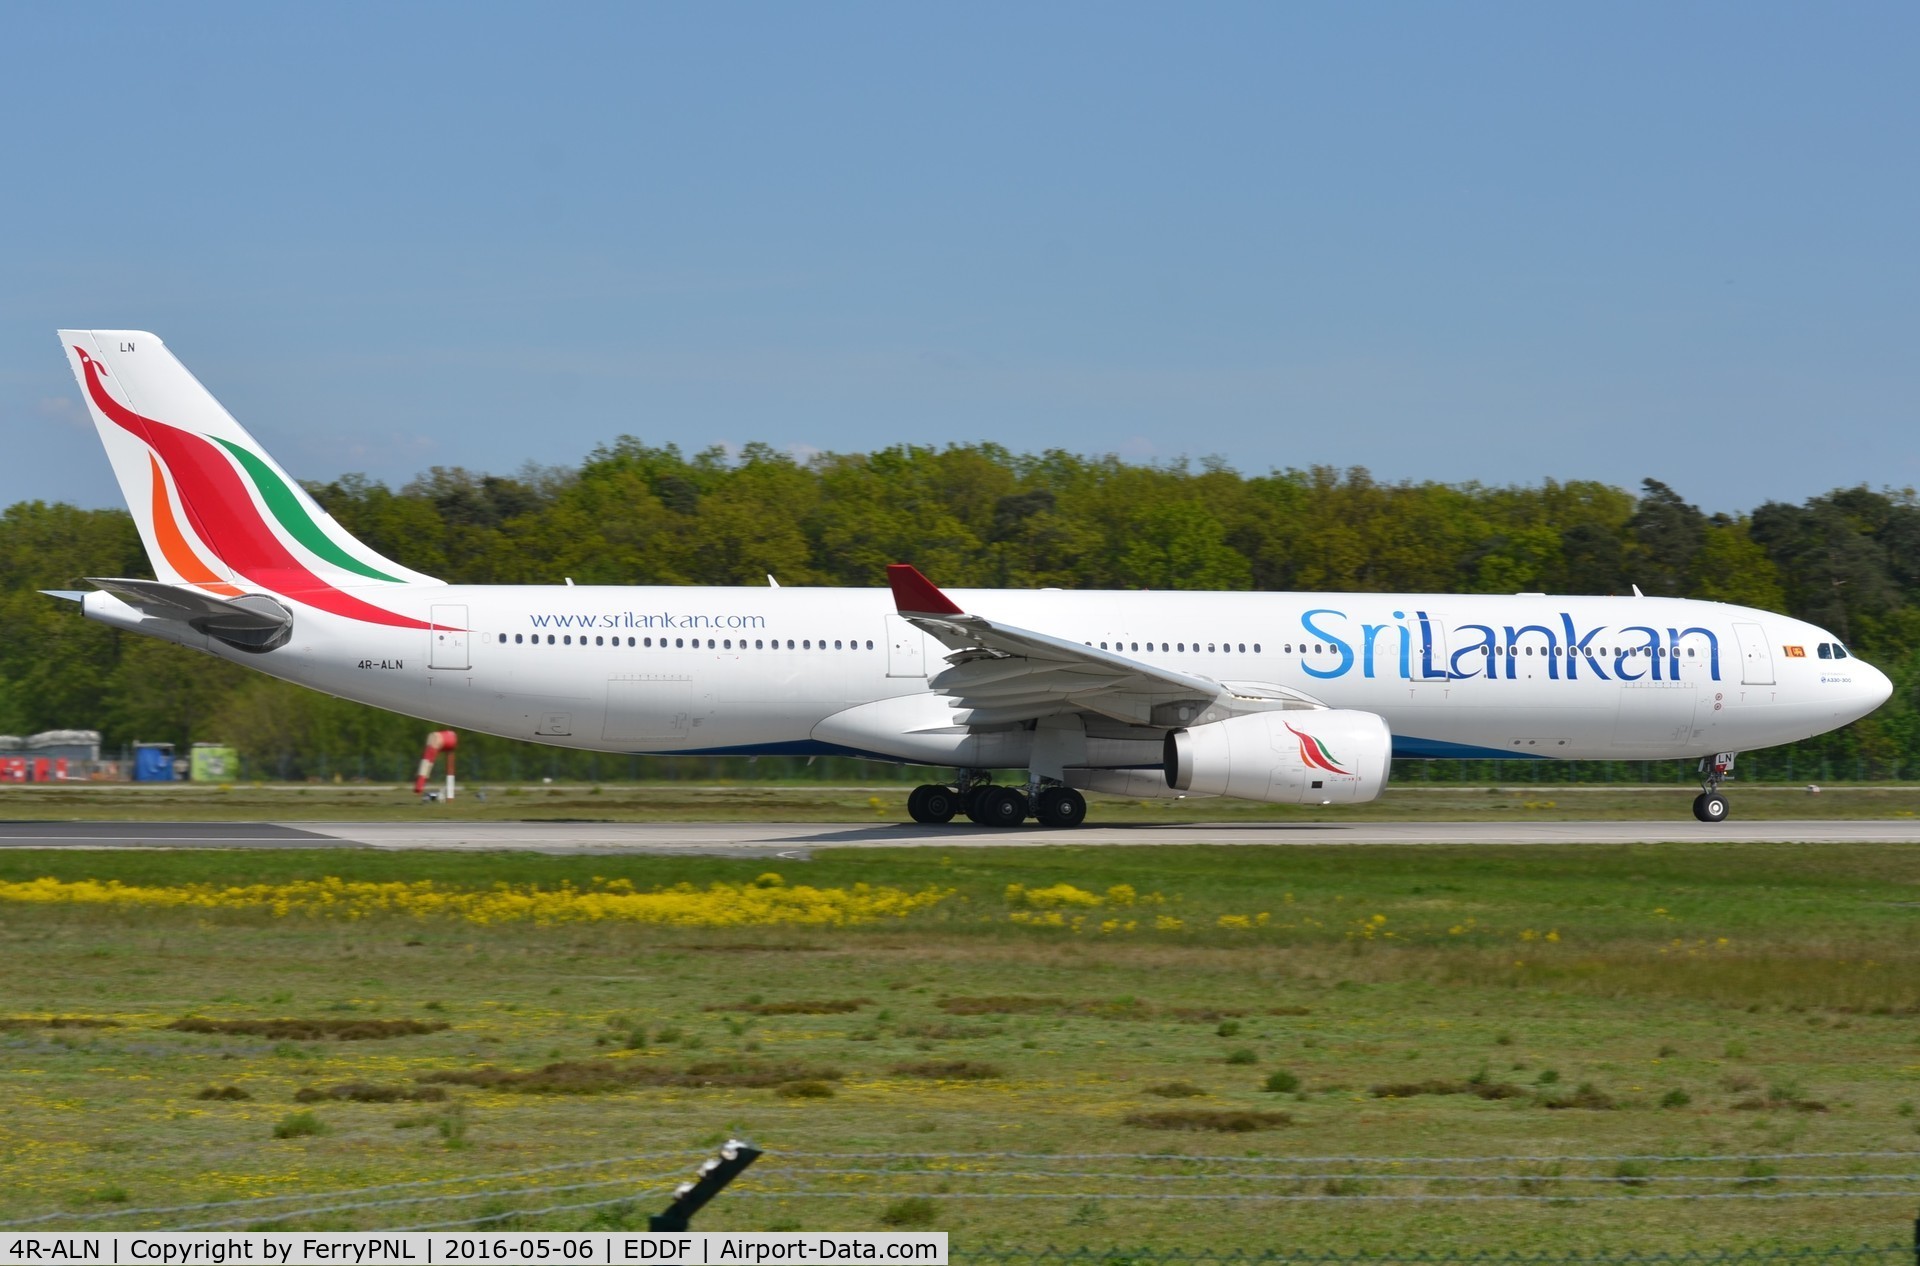 4R-ALN, 2015 Airbus A330-343 C/N 1604, Srilanka A333 taking-off